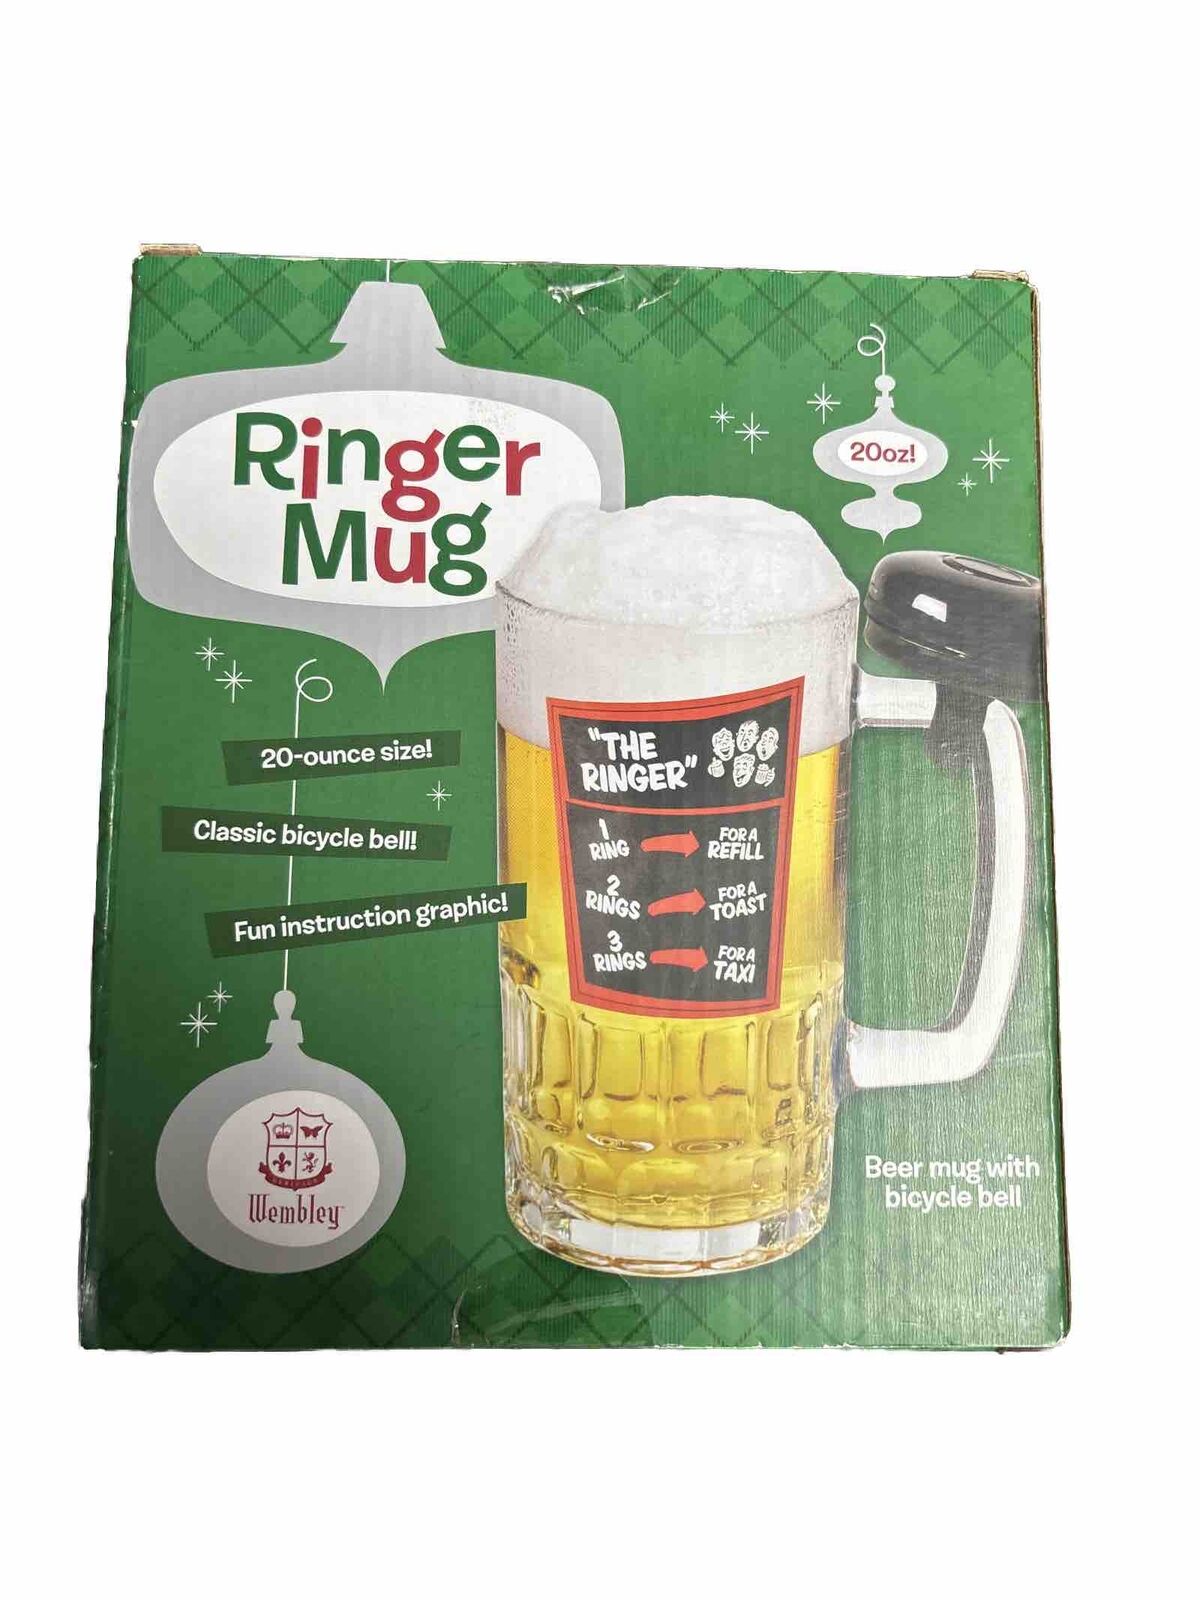 VTG Wembley The Ringer Beer Mug  W/ Bicycle Bell 20 oz Glass Man Cave new sealed